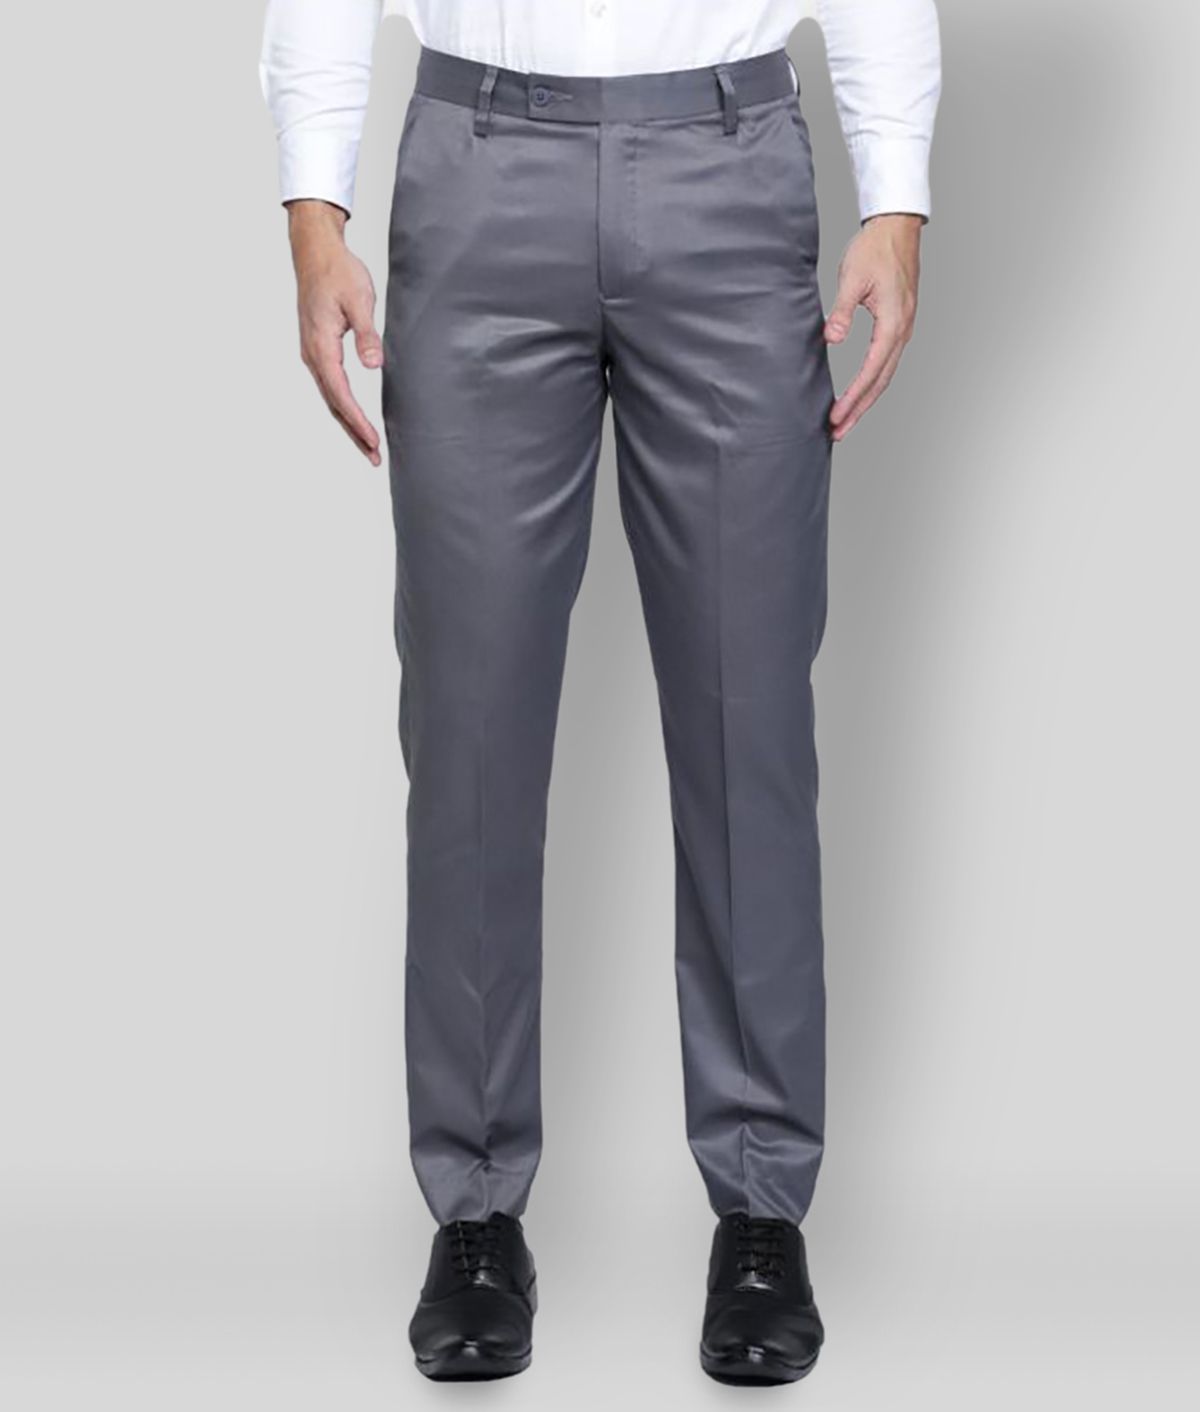     			Haul Chic - Grey Cotton Blend Slim Fit Men's Formal Pants (Pack of 1)